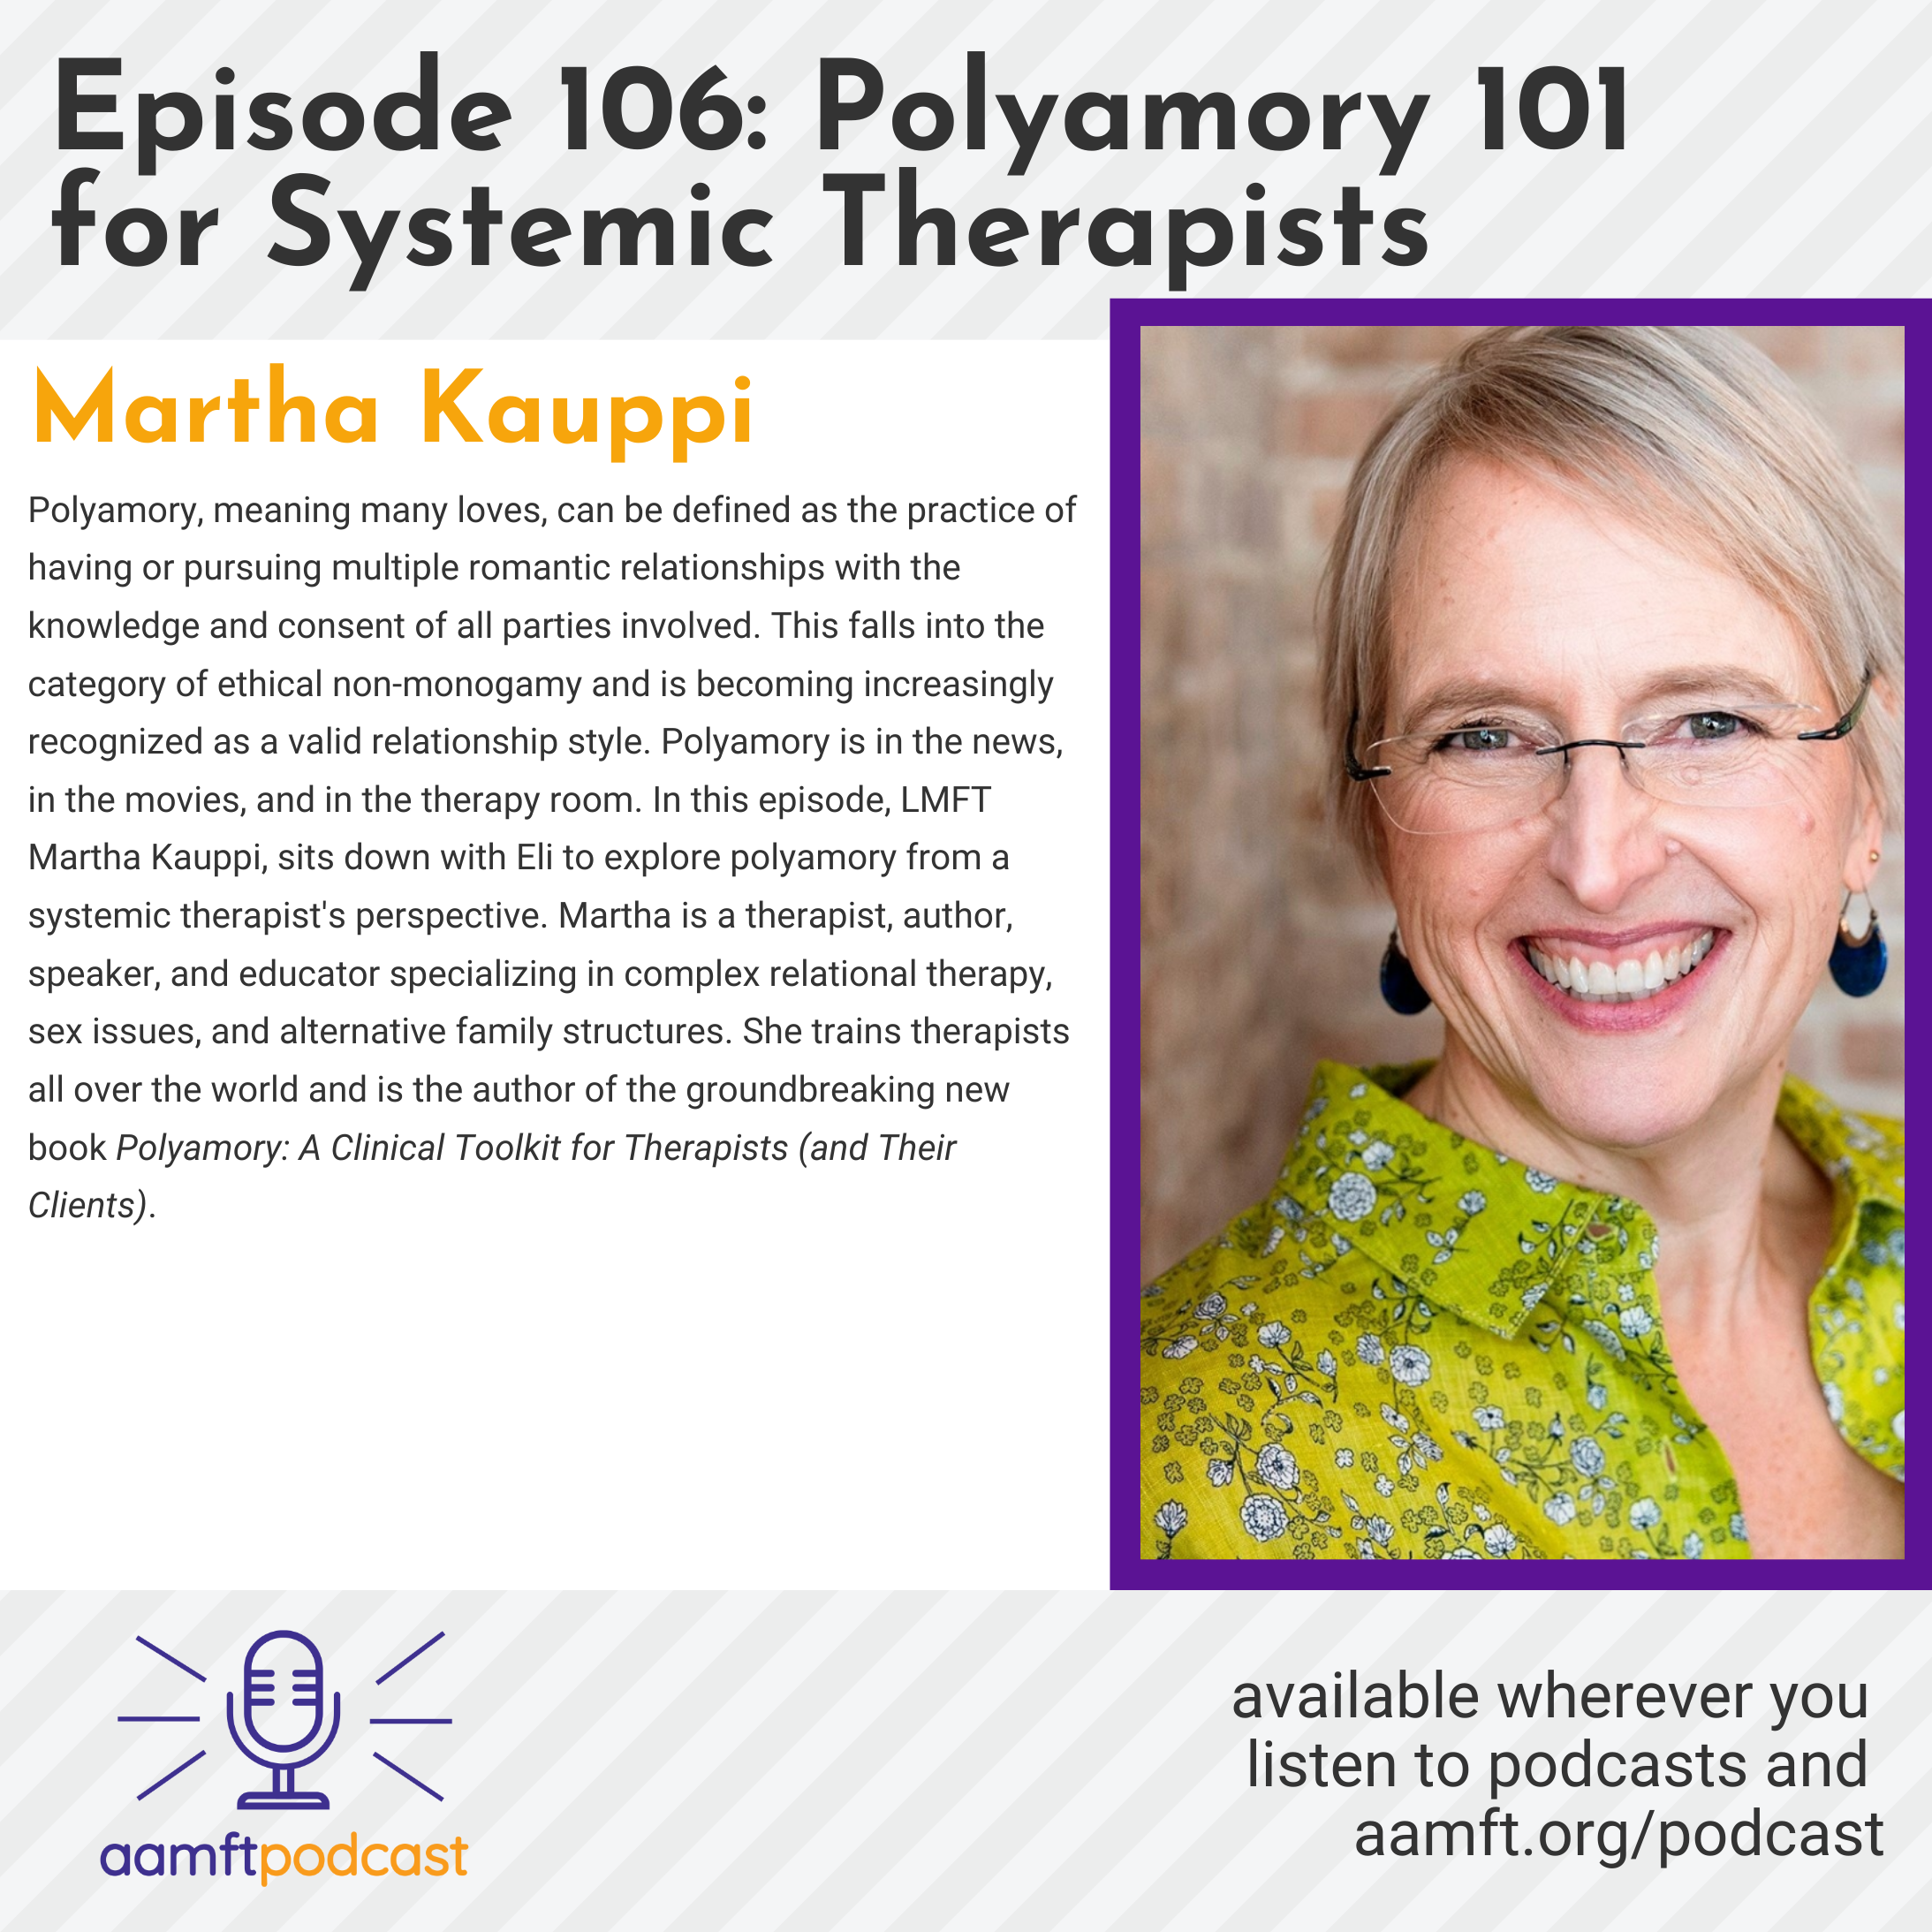 Episode 106: Martha Kauppi